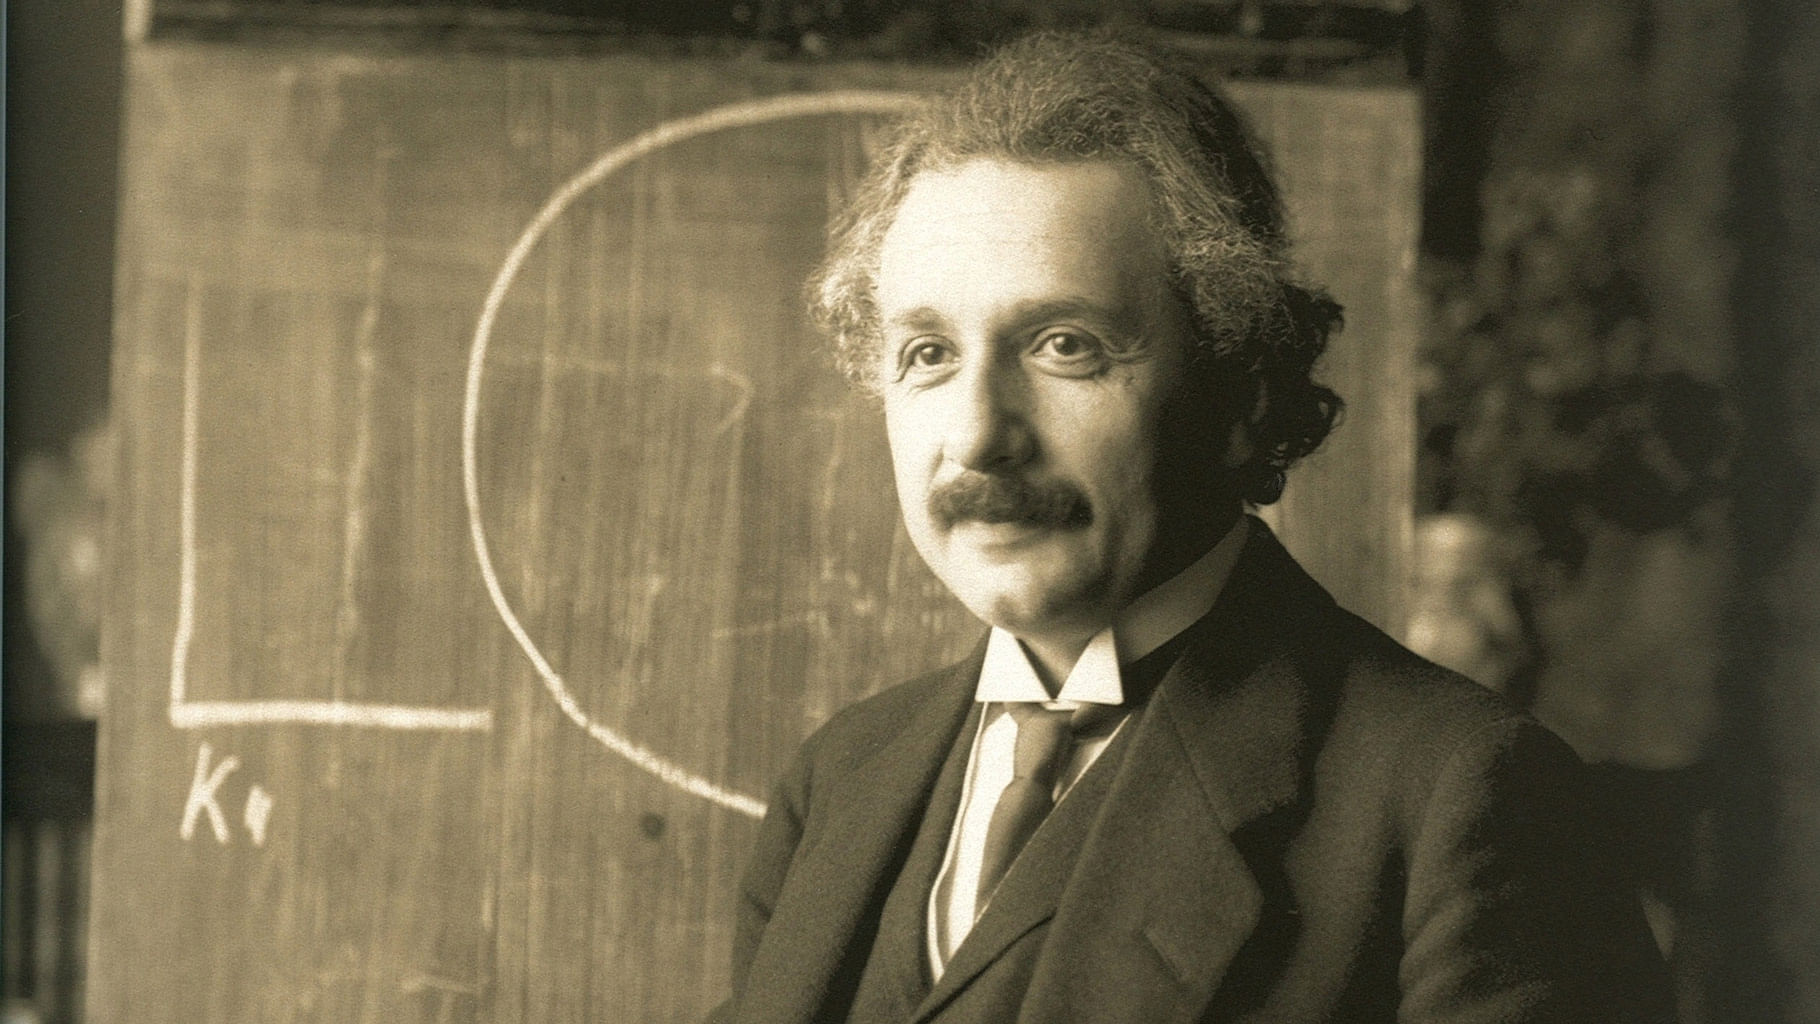 A file photo of Albert Einstein during a lecture in Vienna, 1921. (Photo Courtesy: <a href="https://web.archive.org/web/20070211064905/http://www.bhm.ch/de/news_04a.cfm?bid=4&amp;jahr=2006">Historic Museum of Bern</a>)